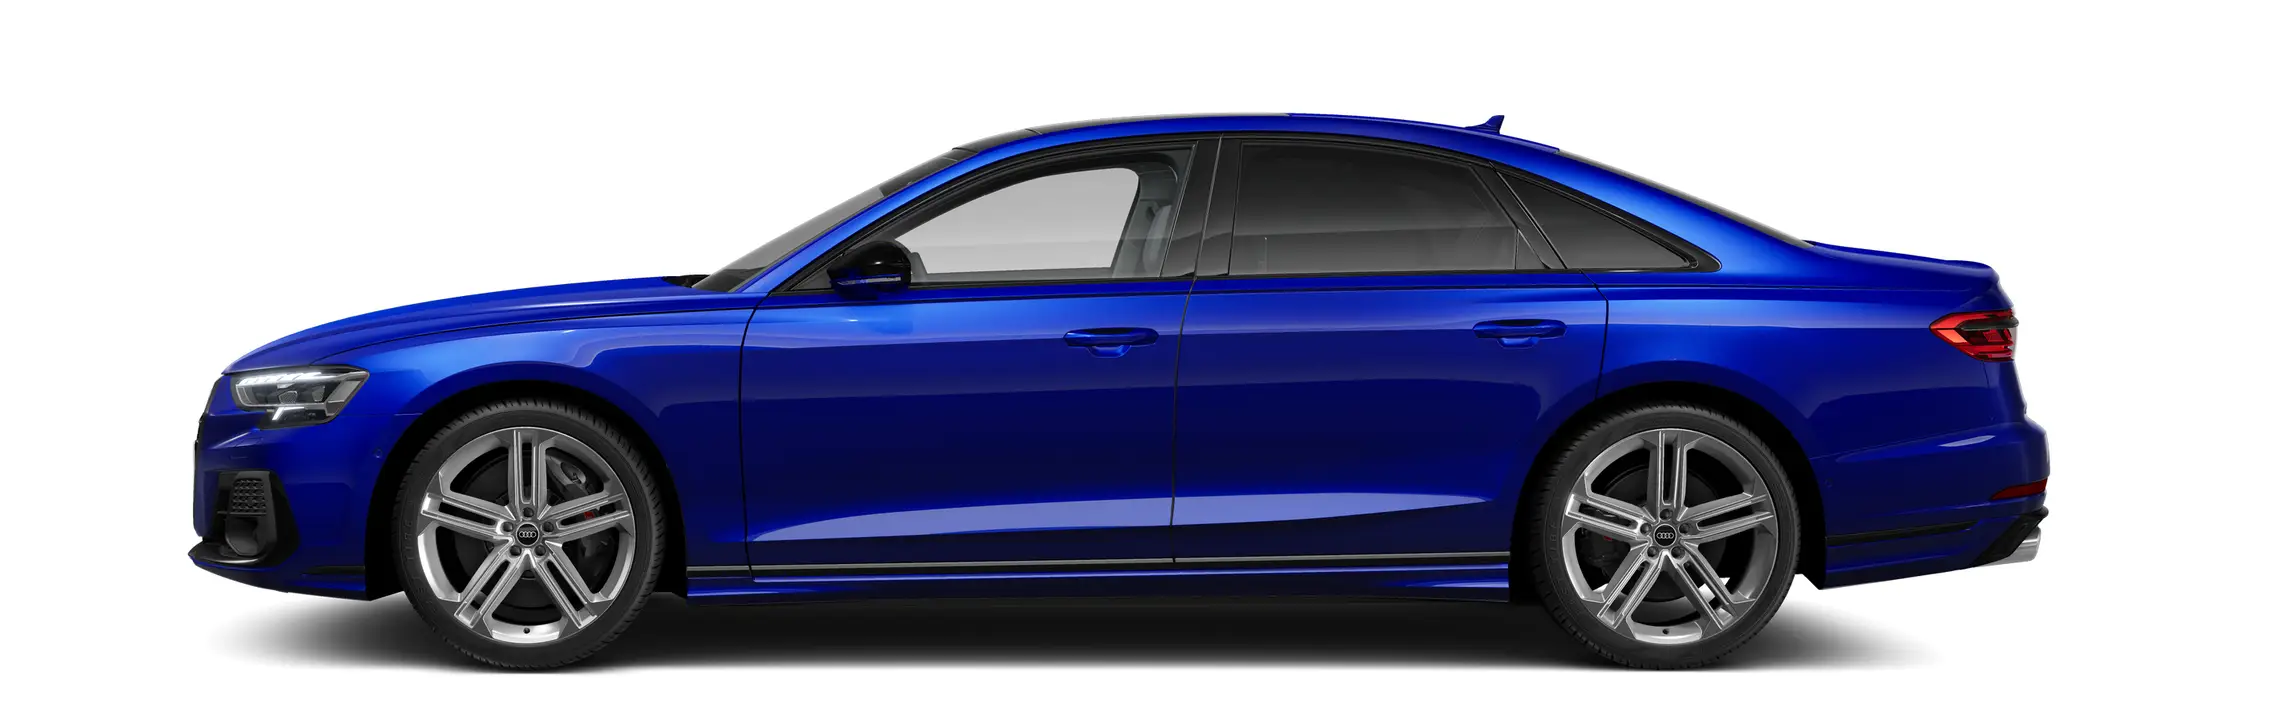 Audi S8 exterior - Side Profile